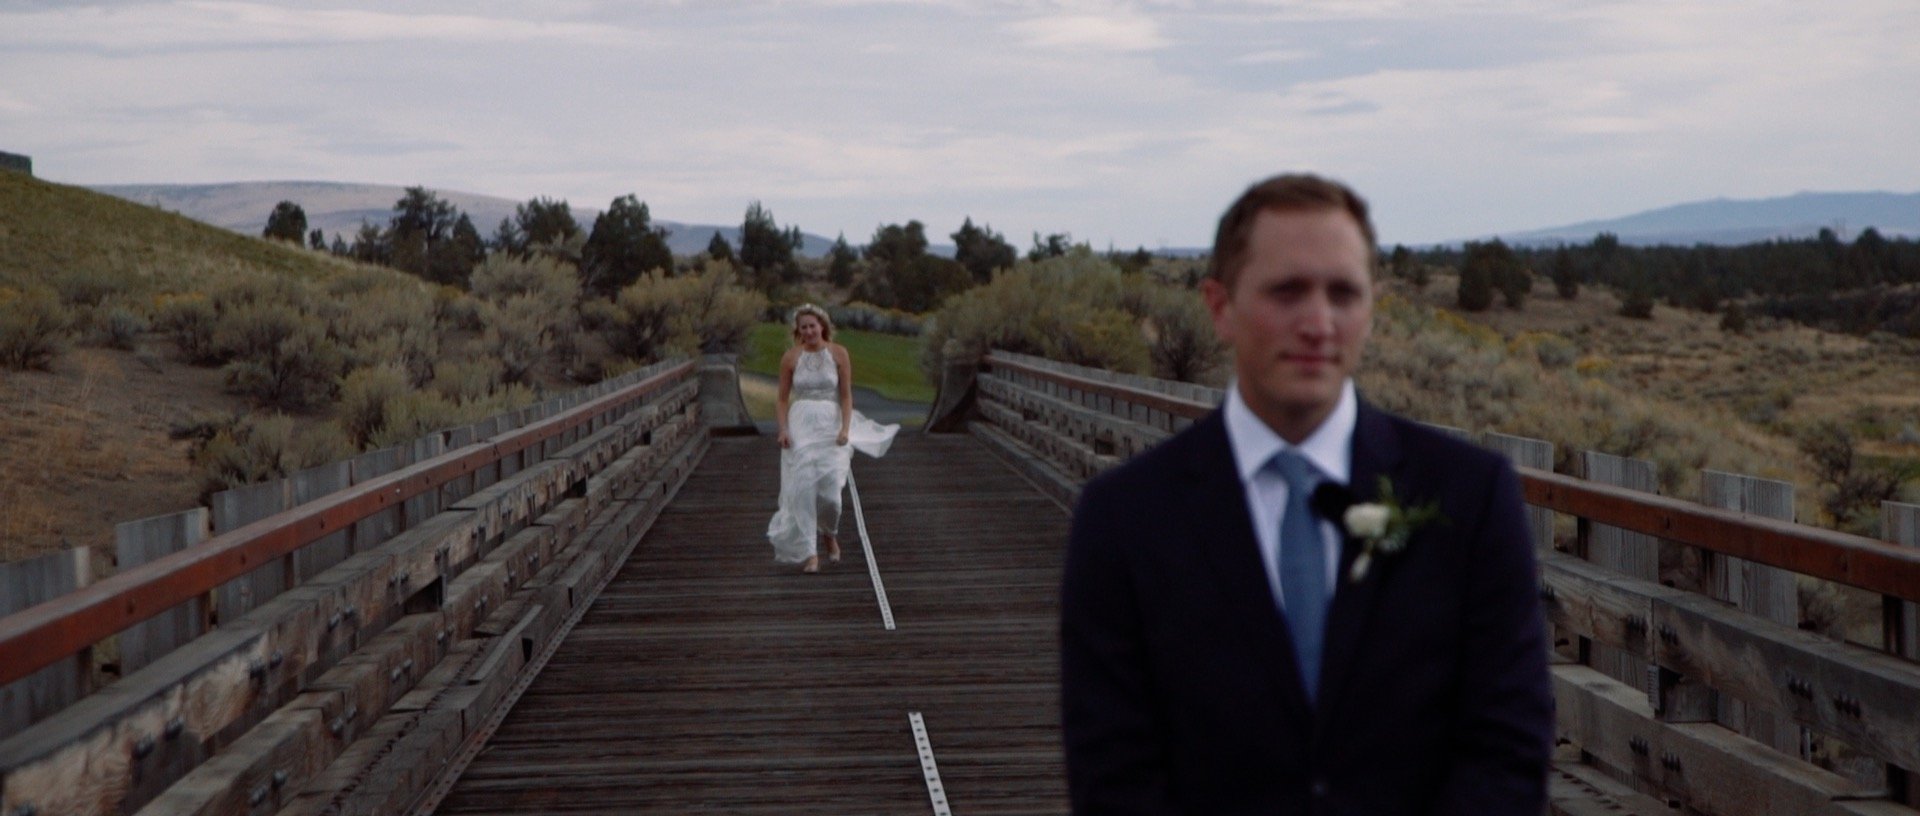 Brasada Ranch Wedding Videography